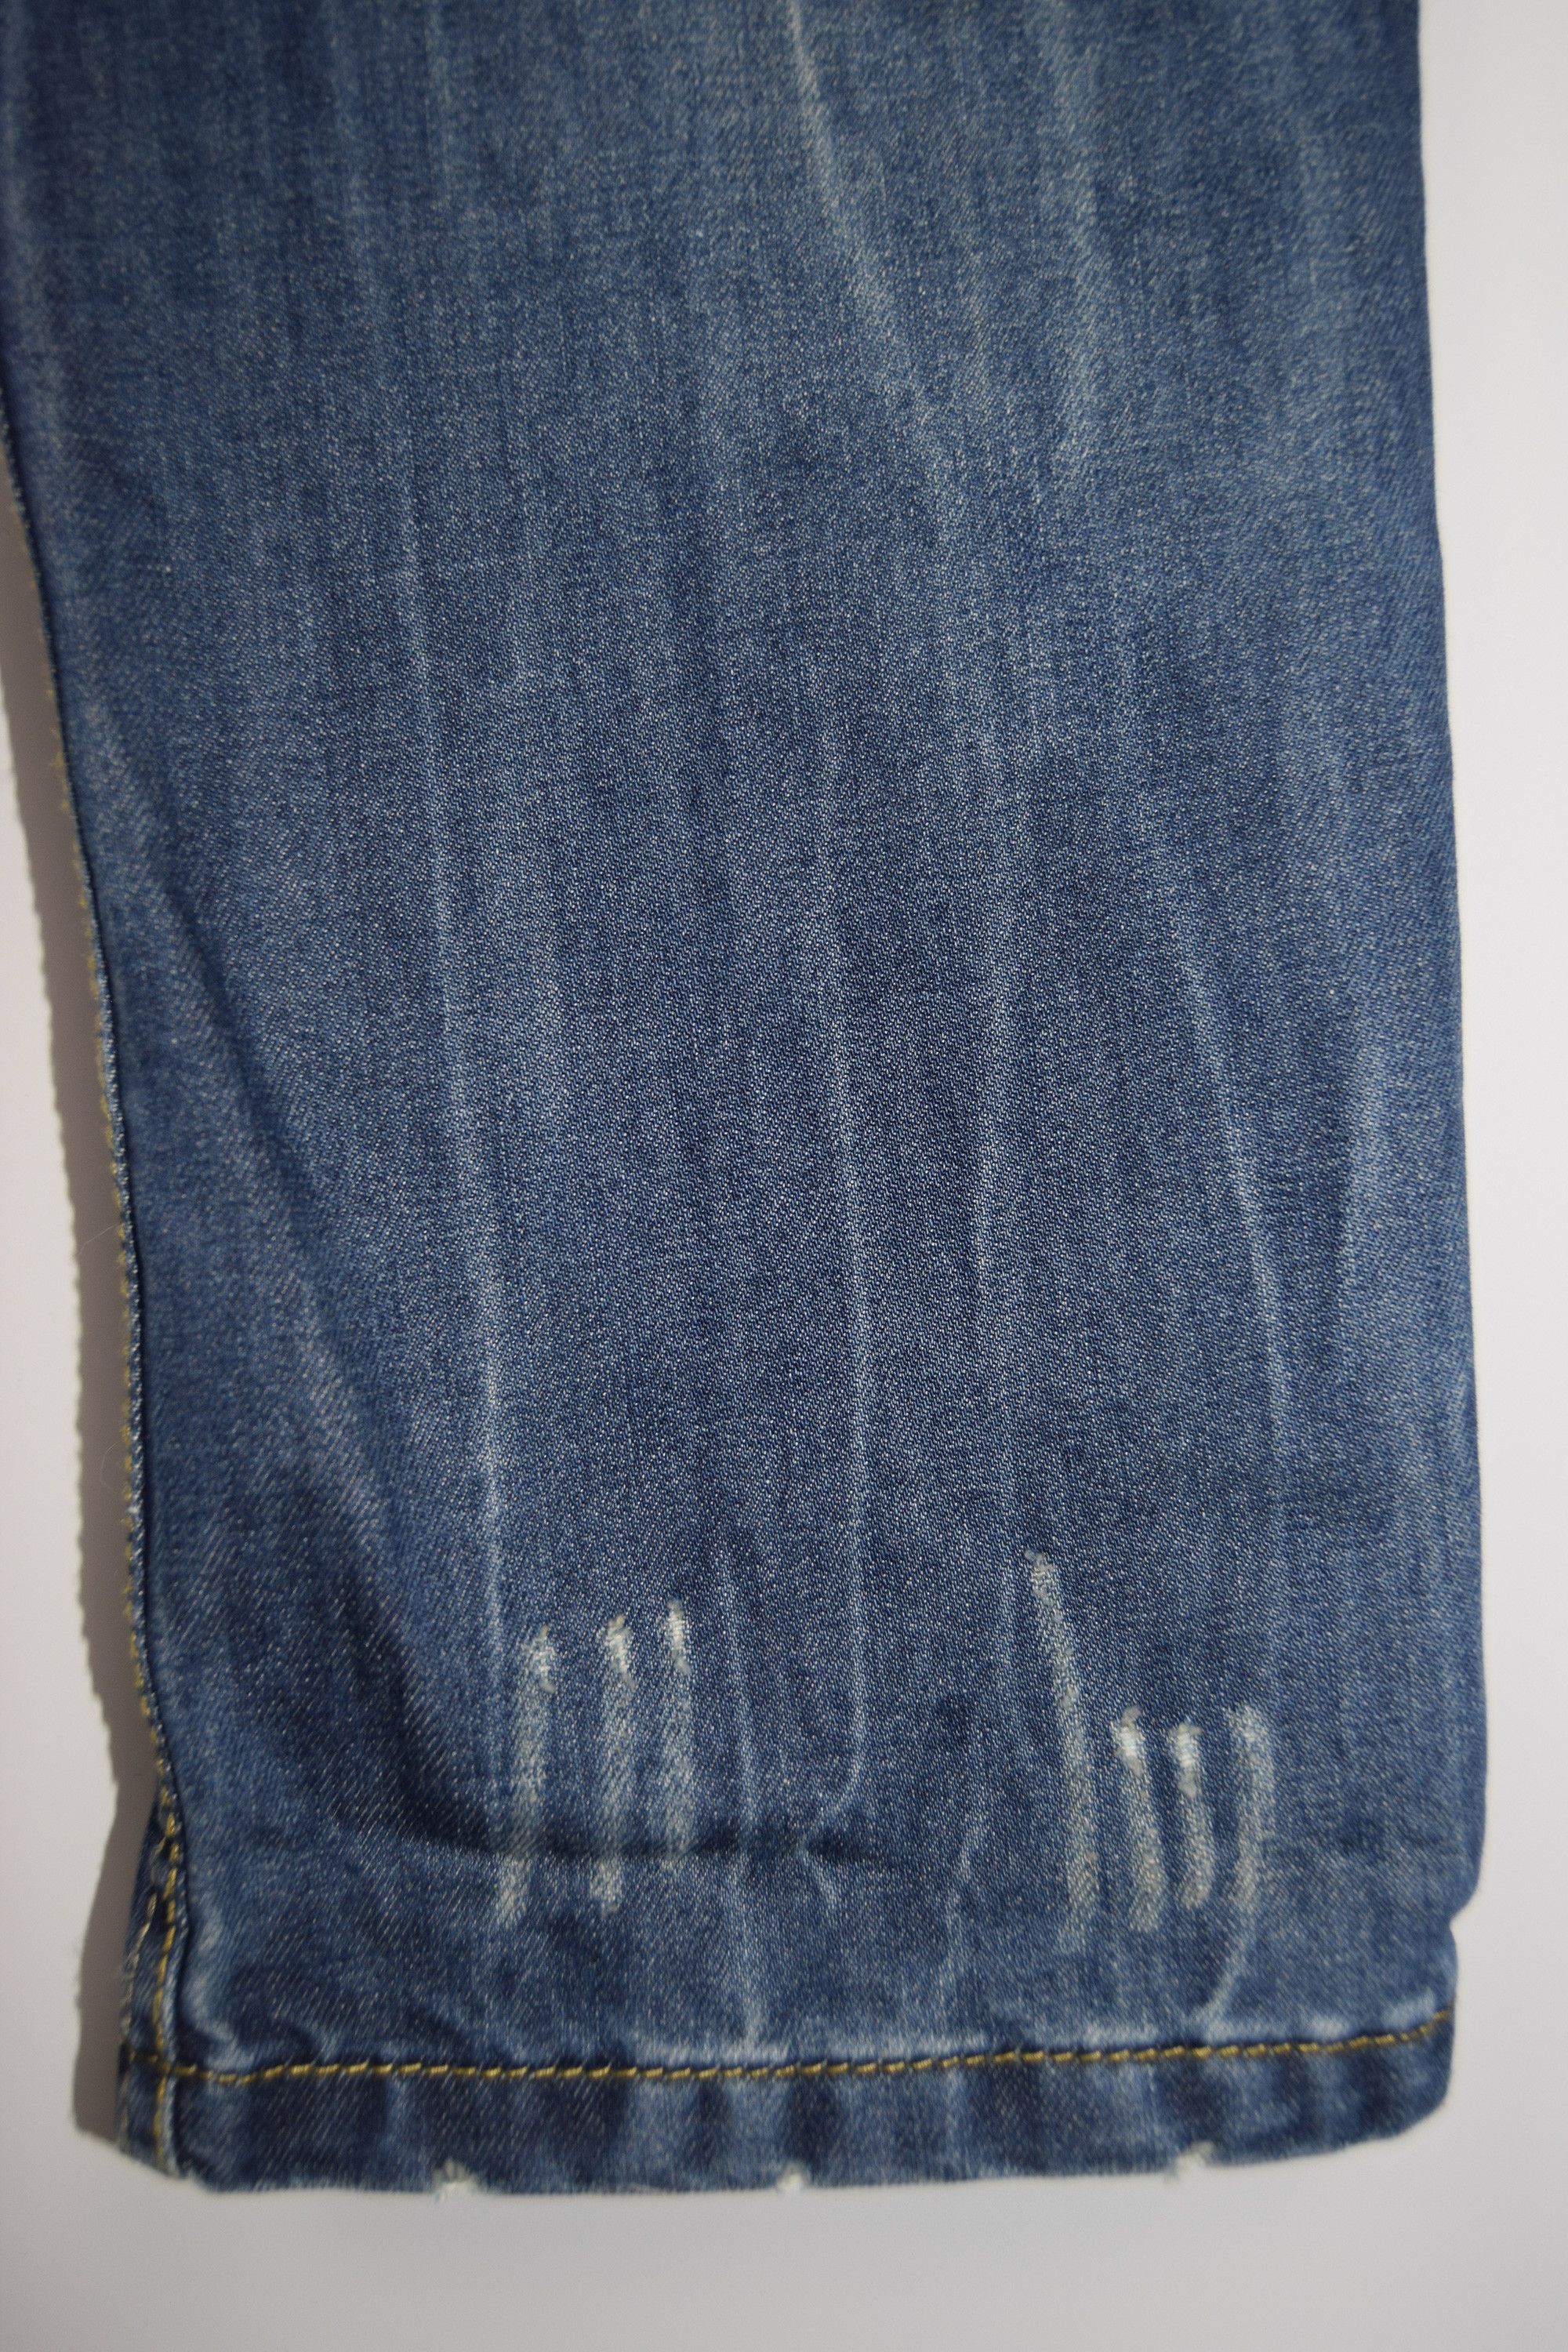 Adidas Diesel and Adidas Kurren Blue Denim Raw Selvedged Jeans Size US 31 - 4 Thumbnail